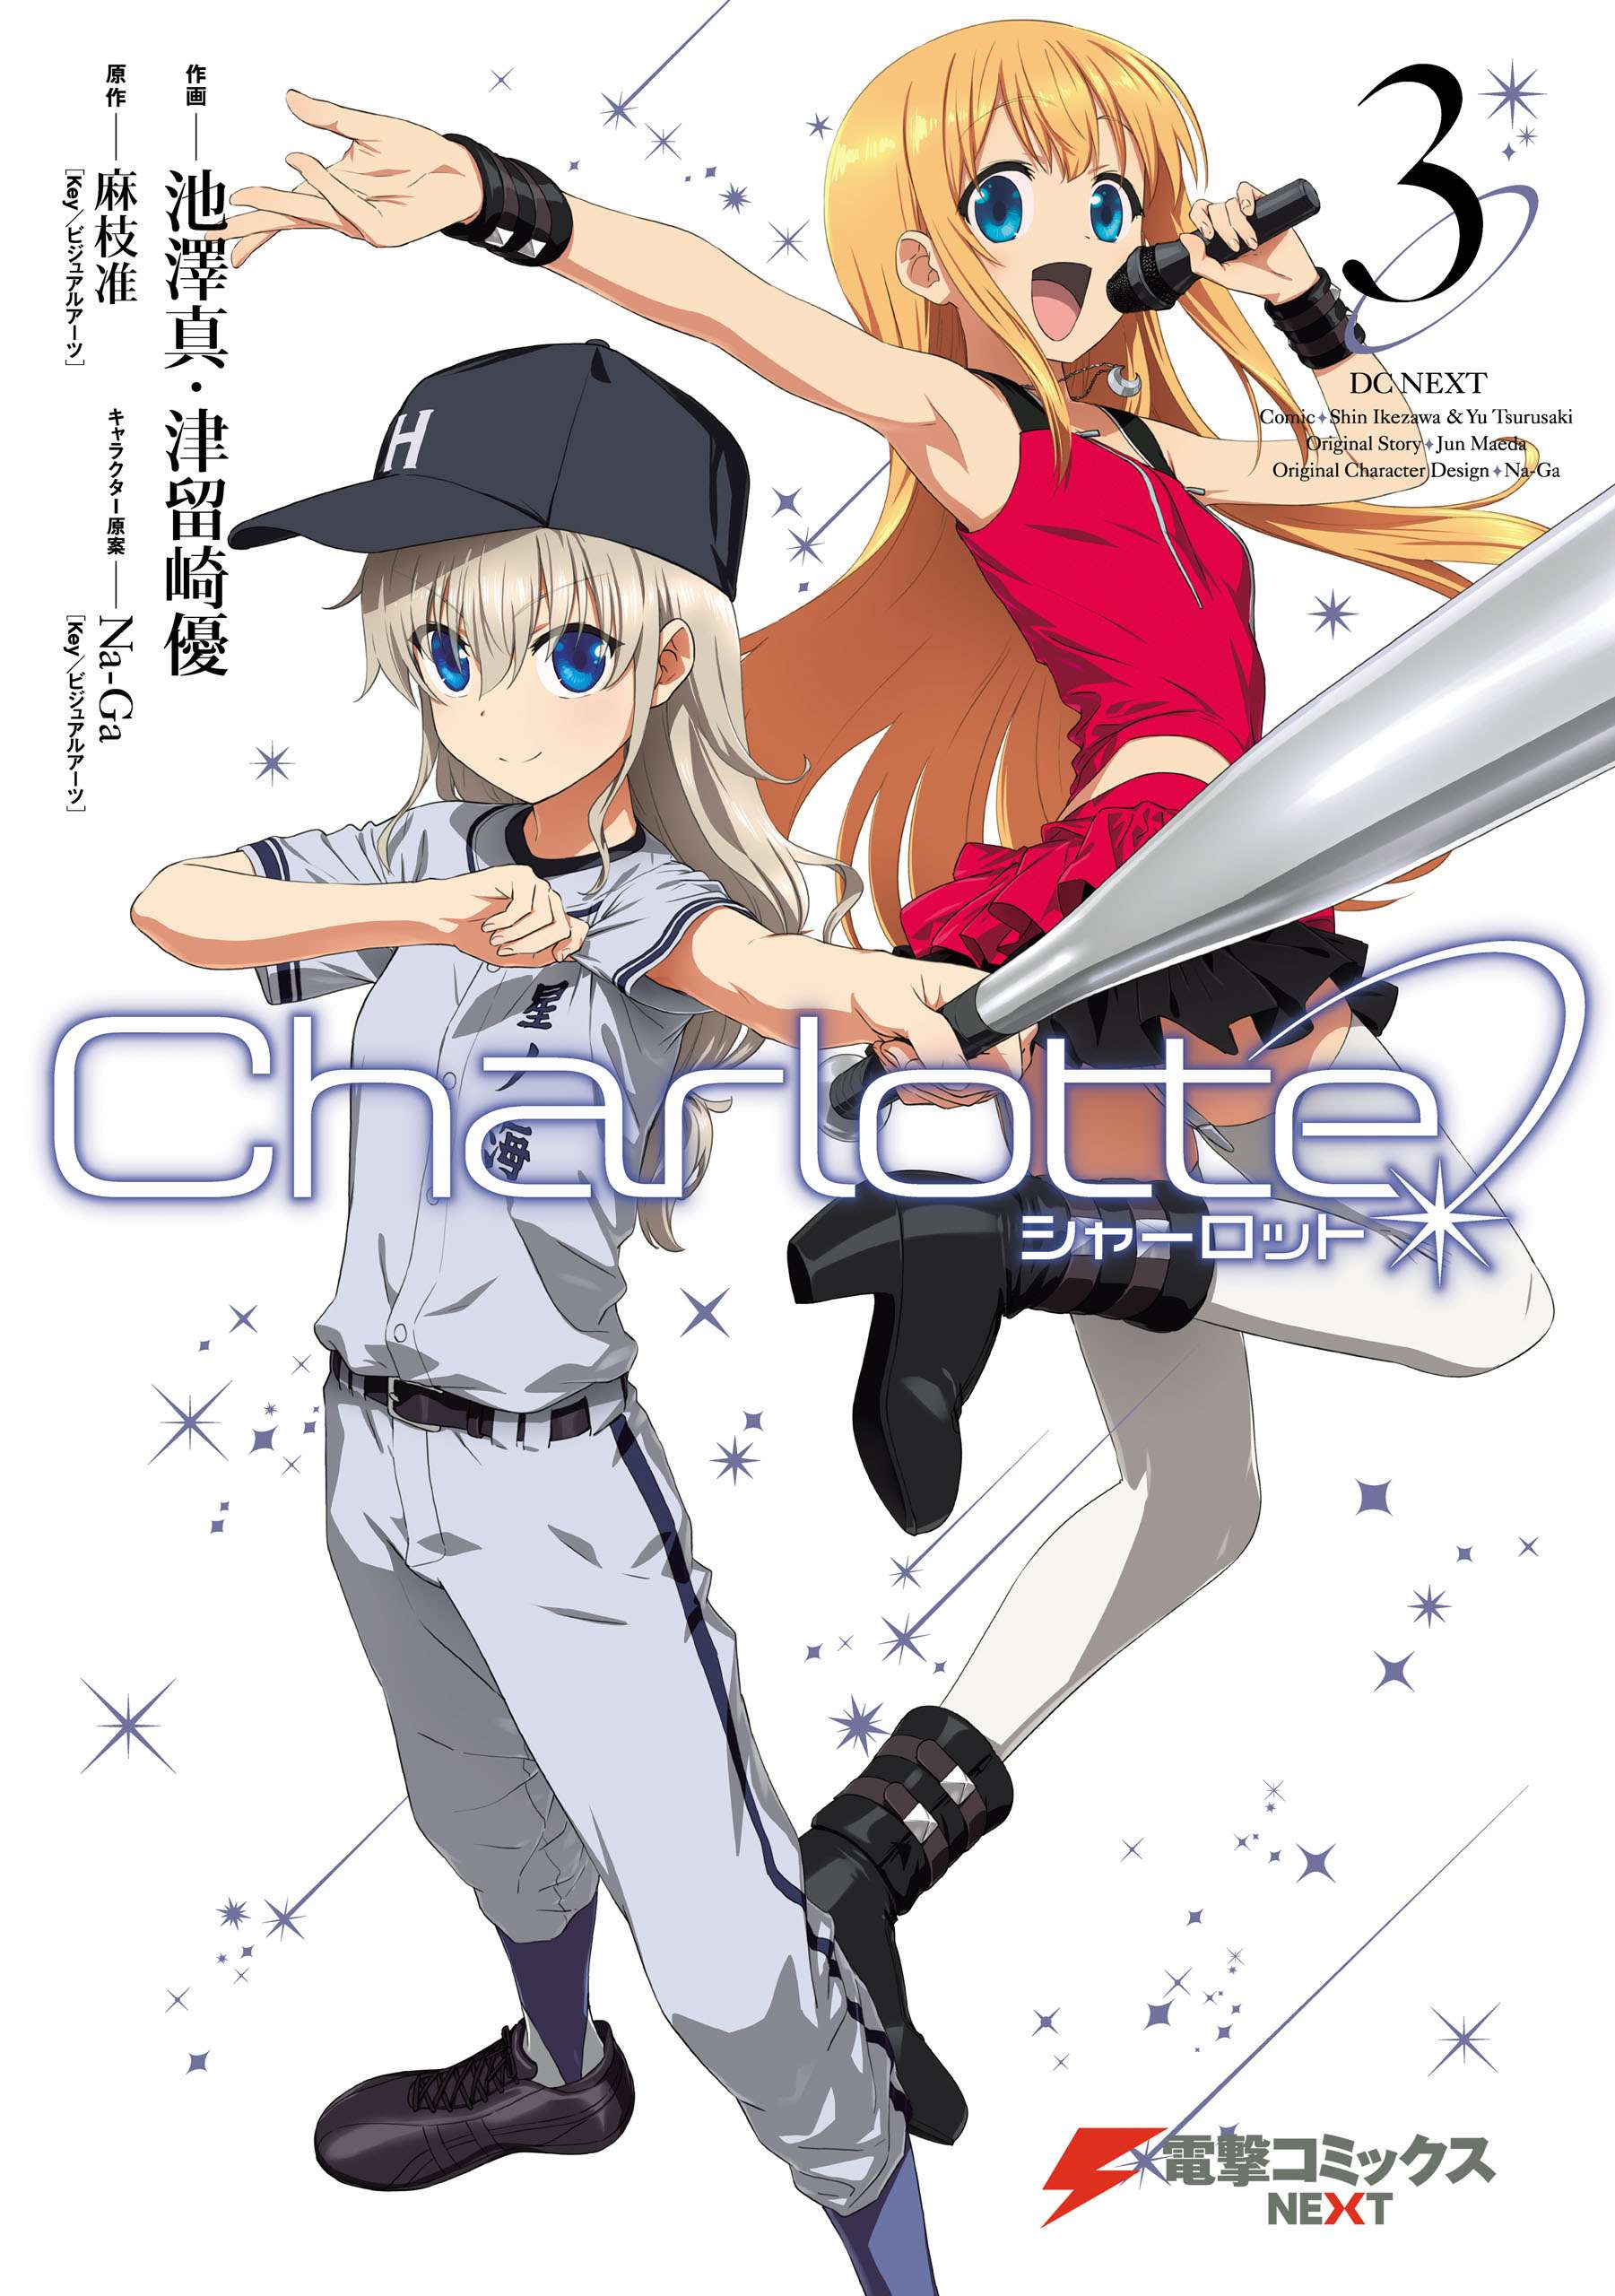 Charlotte 3巻 マンガ 電子書籍 U Next 初回600円分無料